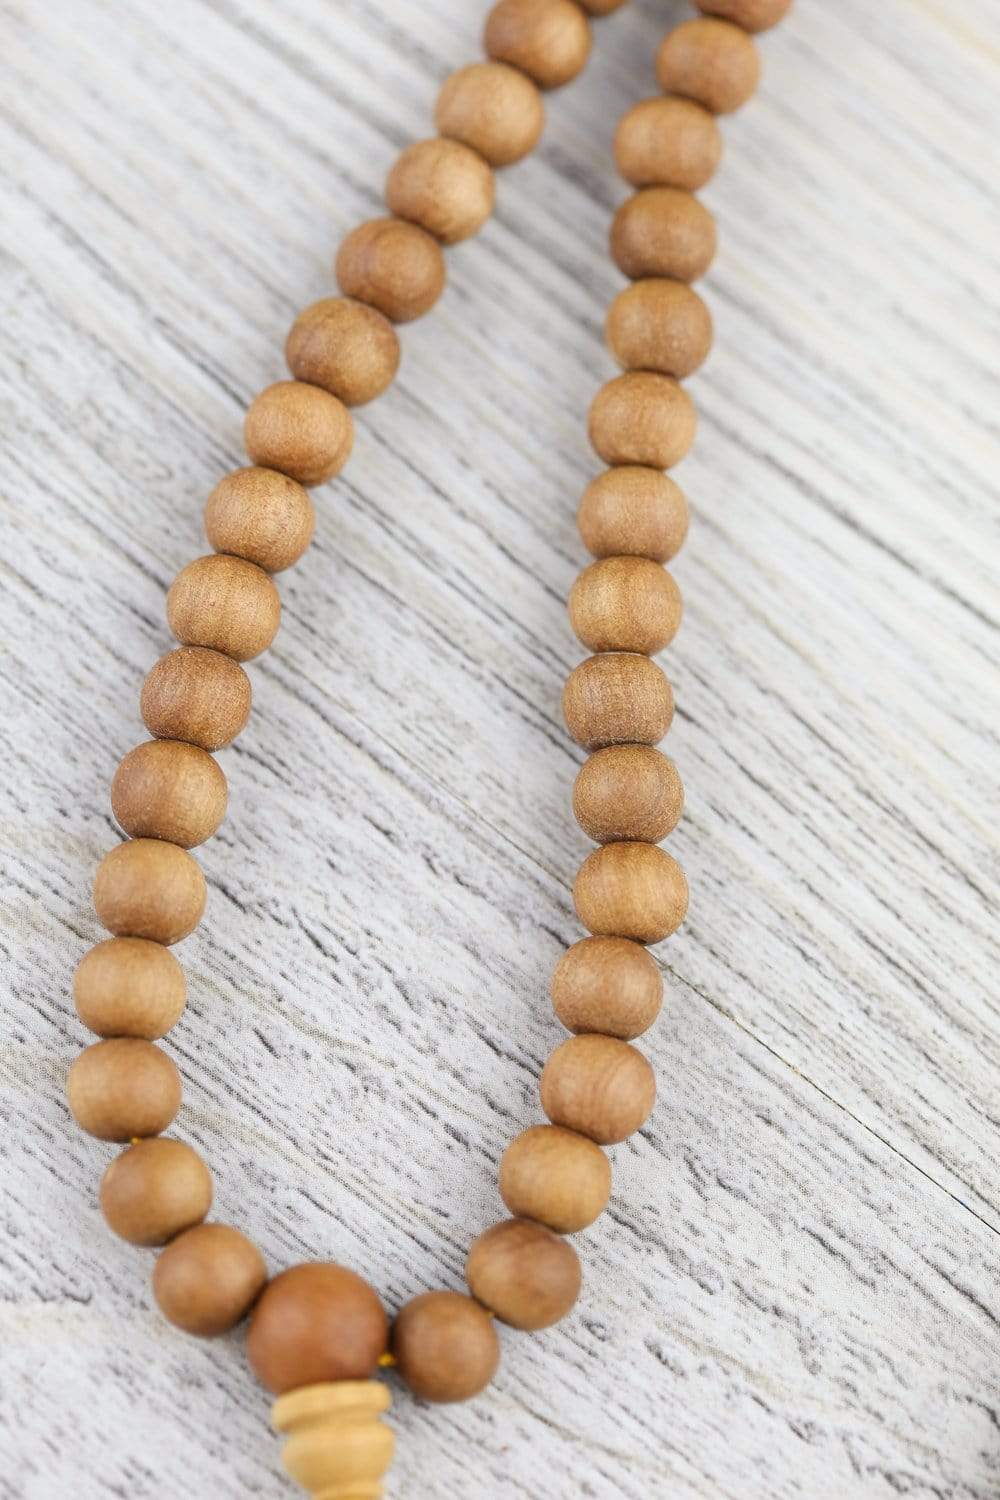 108 Beads SandalWood Mala - Meditation Mala